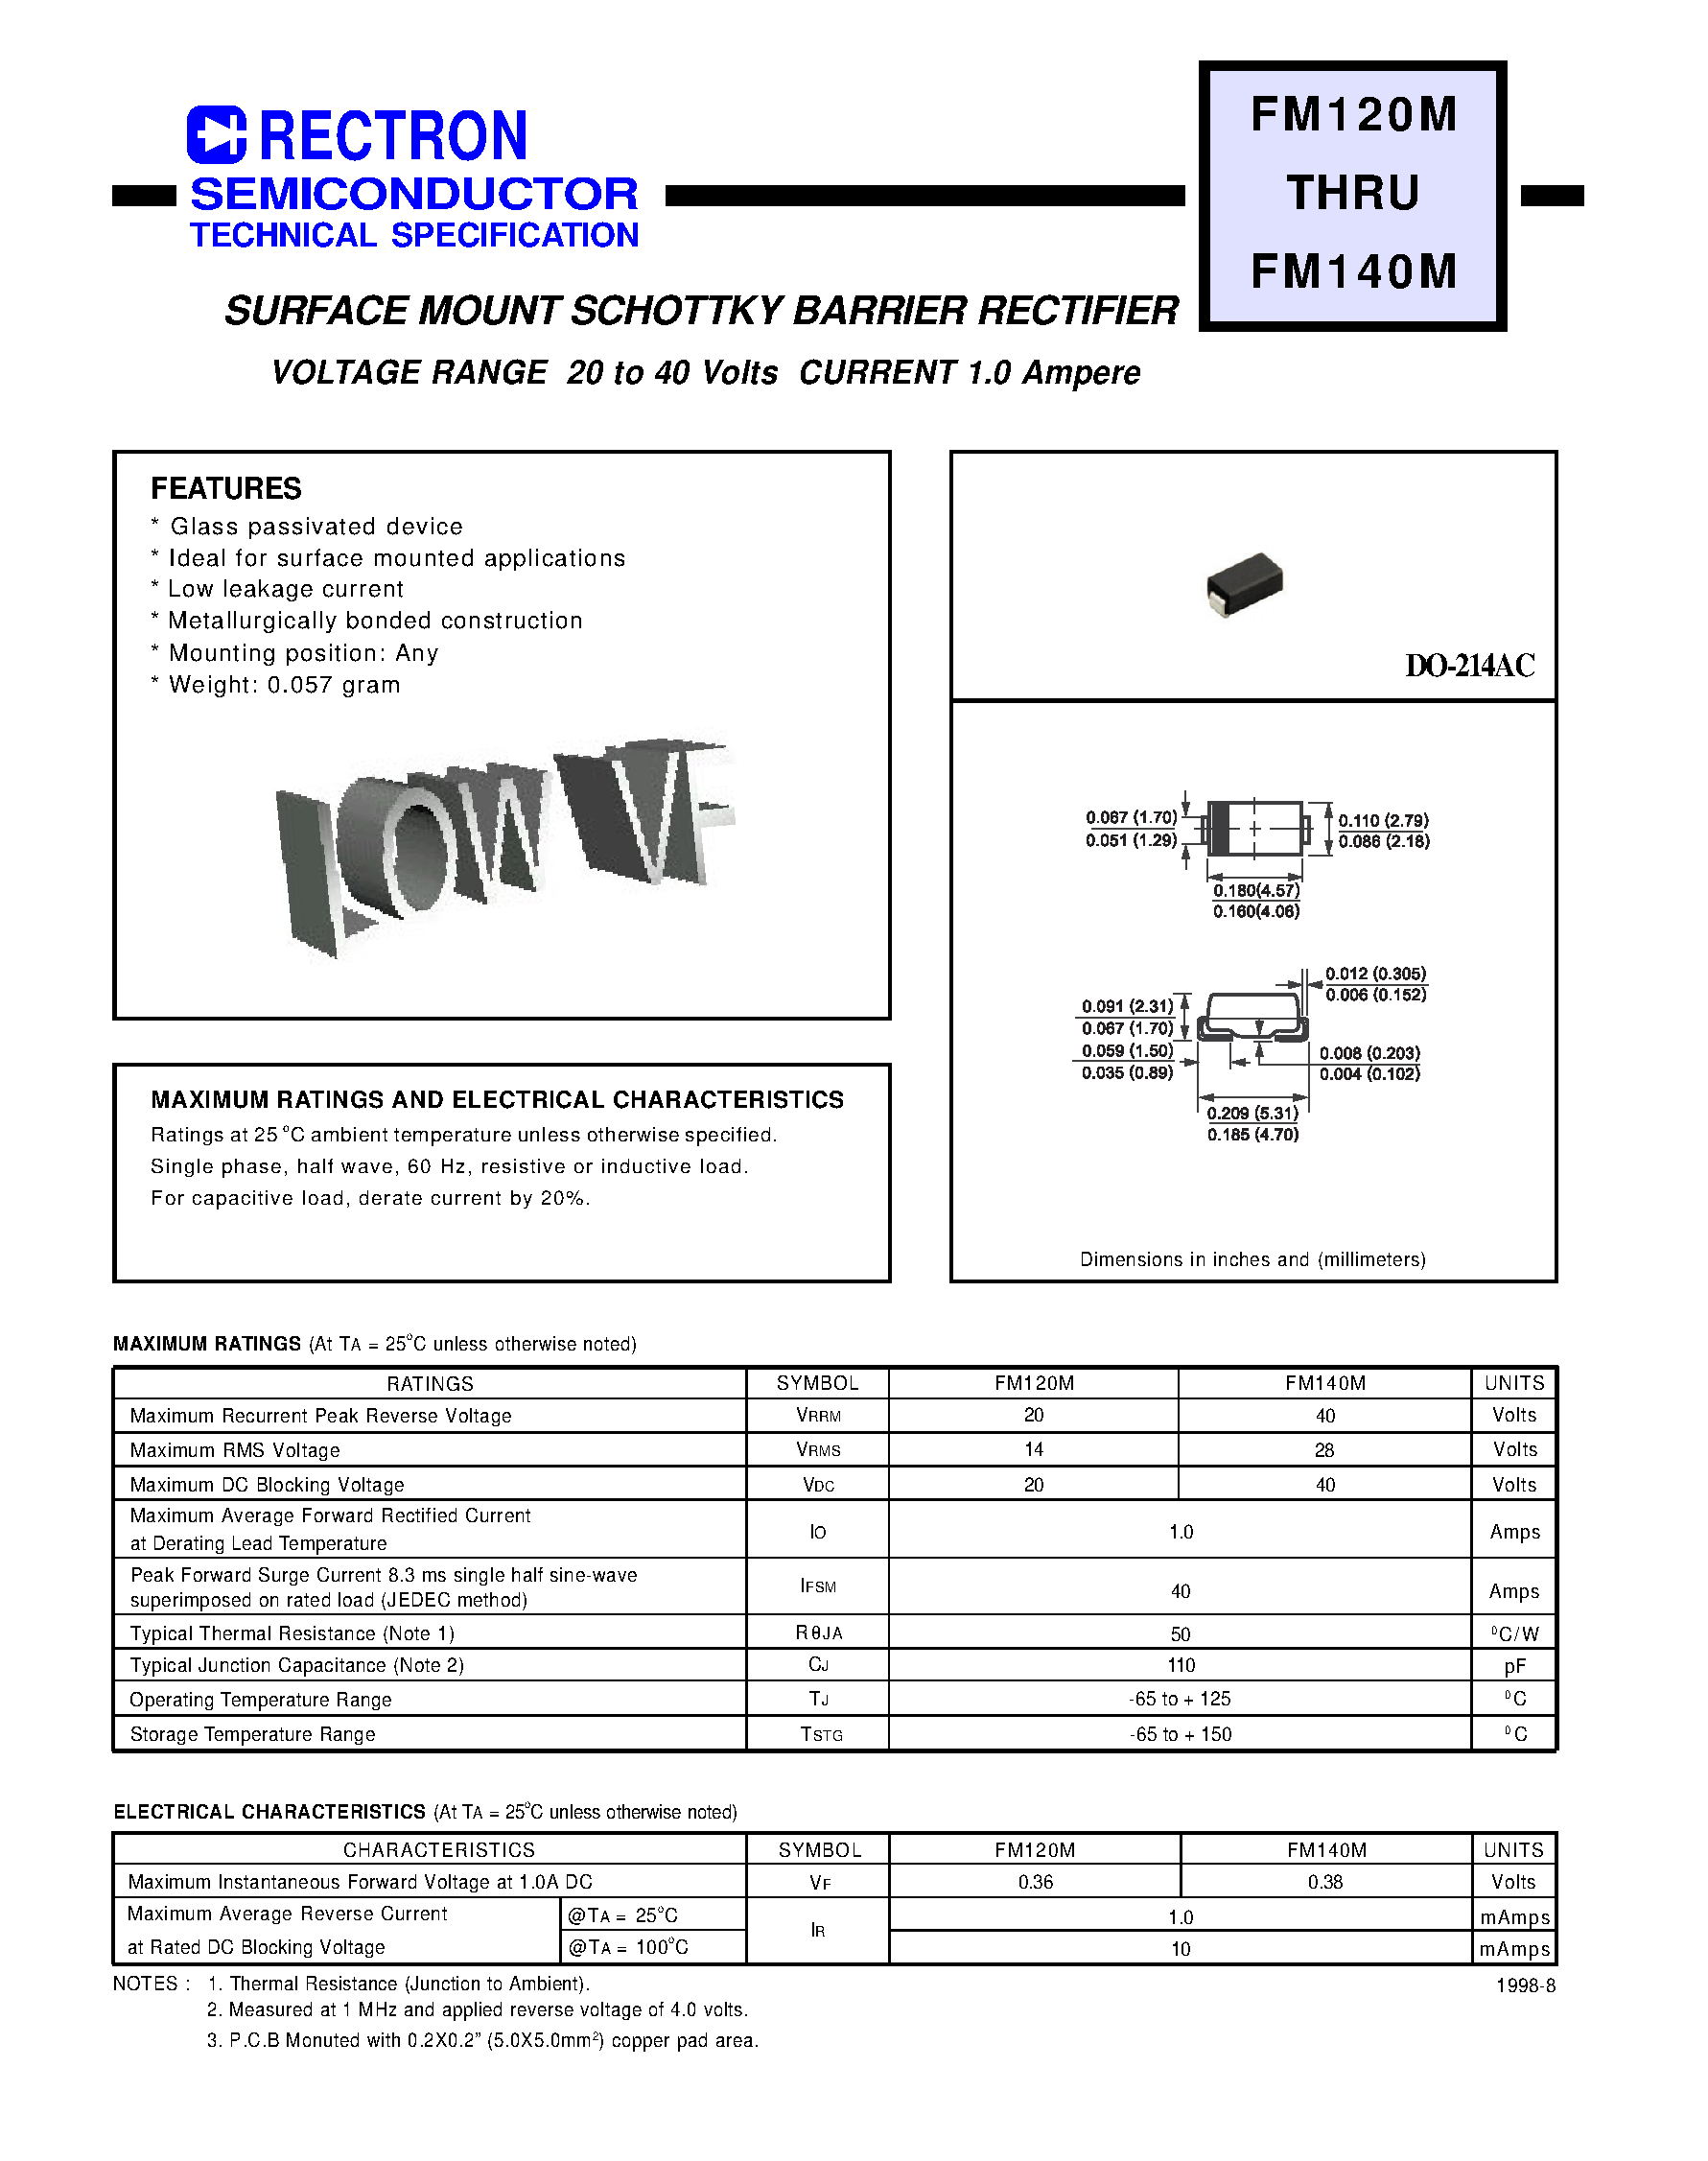 Datasheet FM120M - SURFACE MOUNT SCHOTTKY BARRIER RECTIFIER (VOLTAGE RANGE 20 to 40 Volts CURRENT 1.0 Ampere) page 1